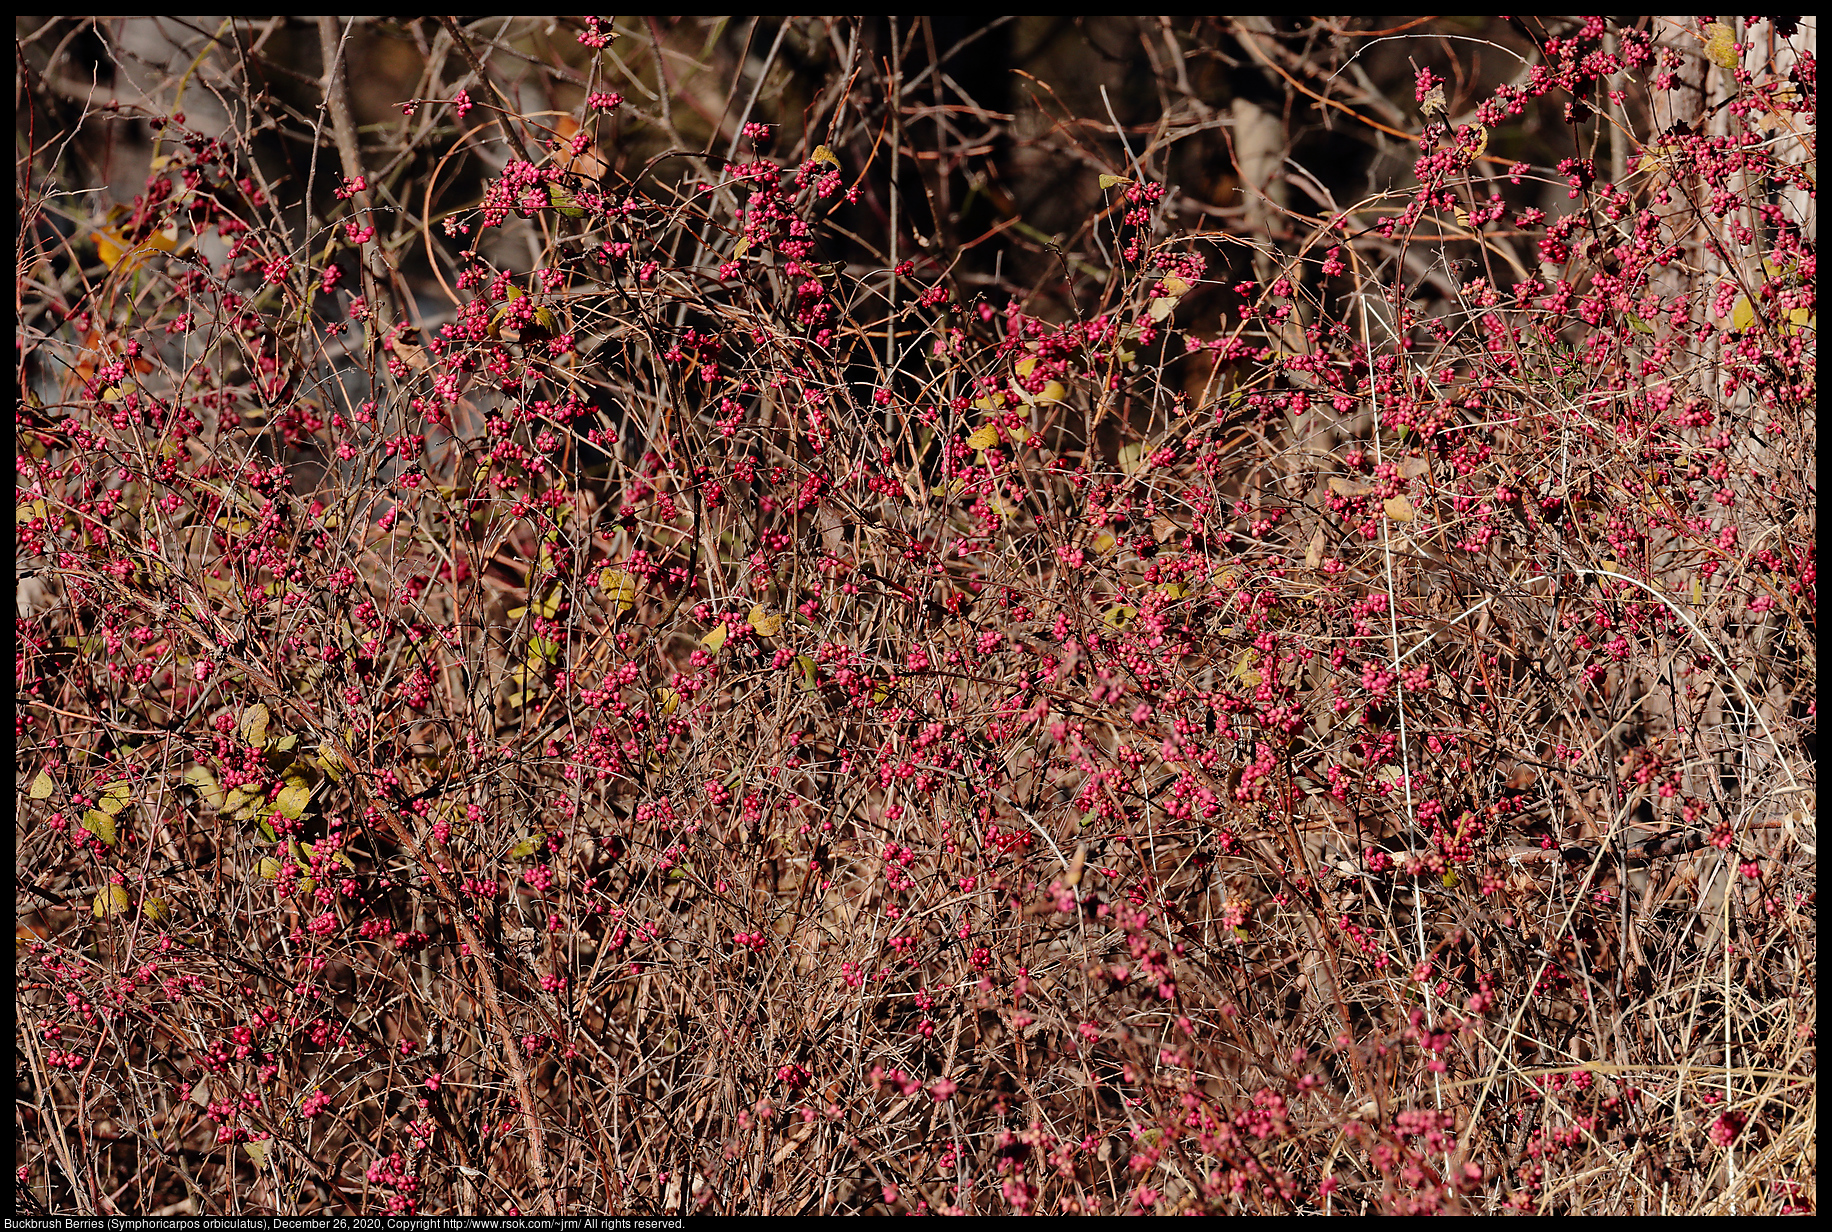 Buckbrush Berries (Symphoricarpos orbiculatus), December 26, 2020